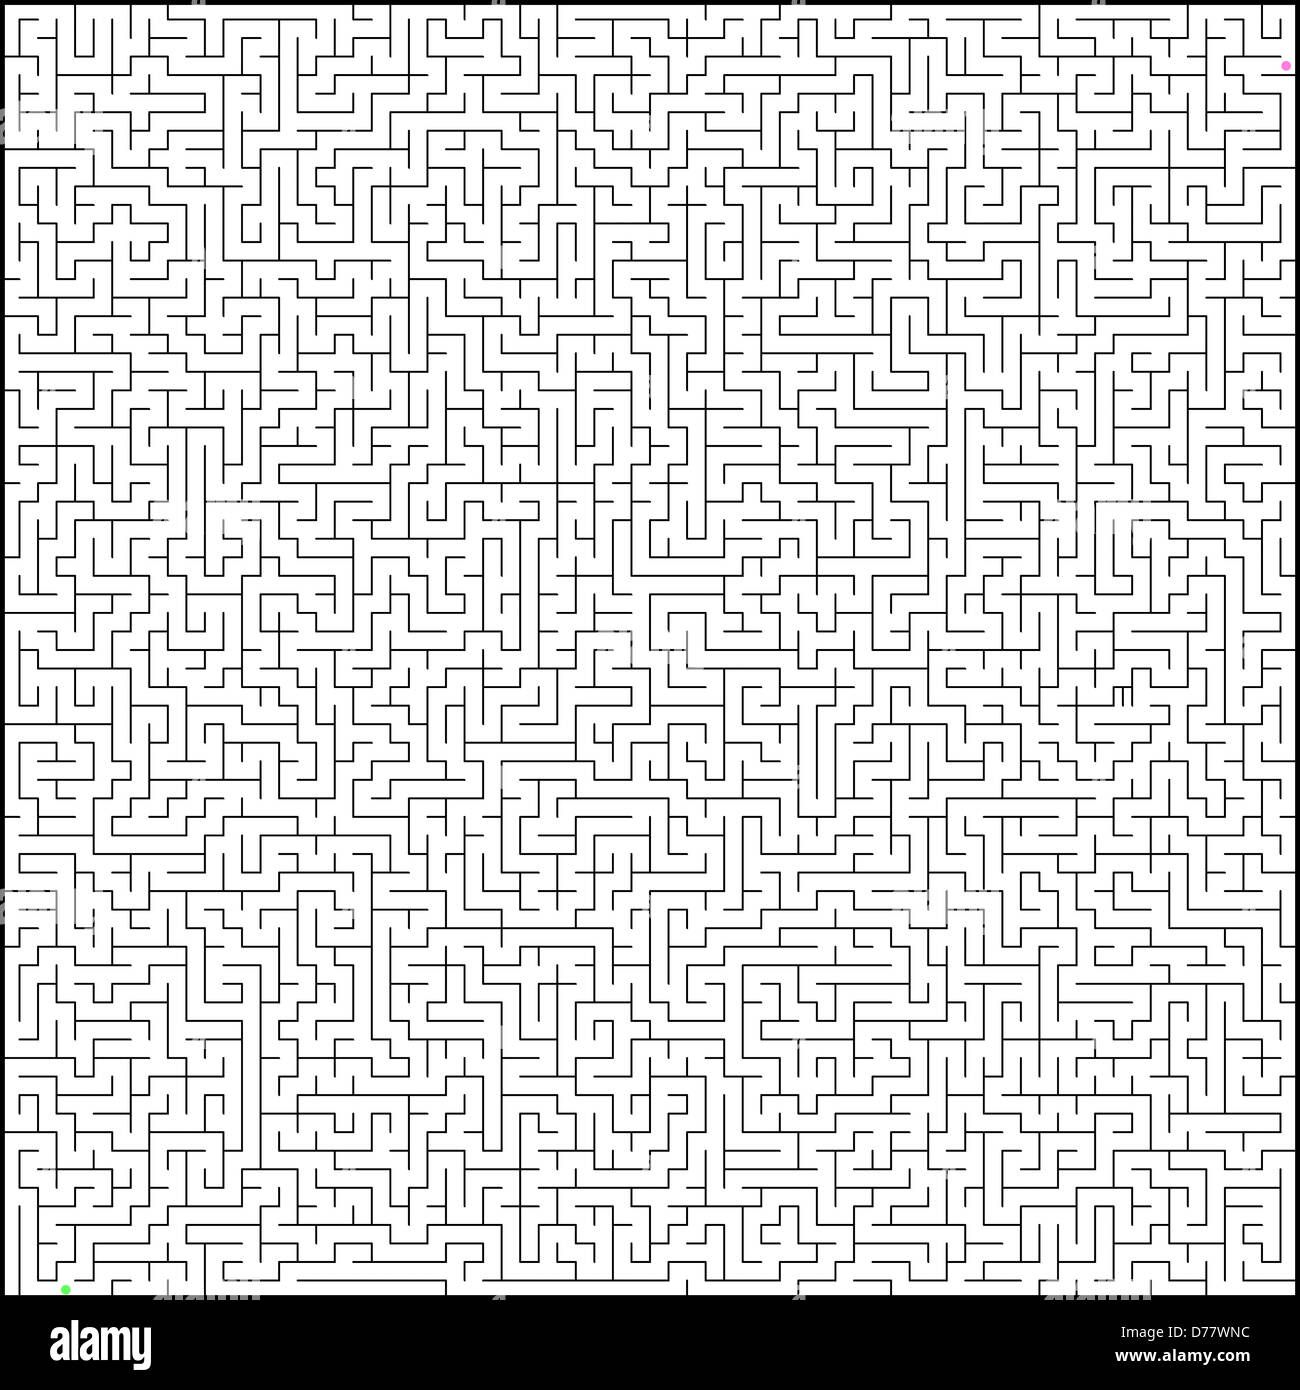 illustration of perfect maze. Stock Photo